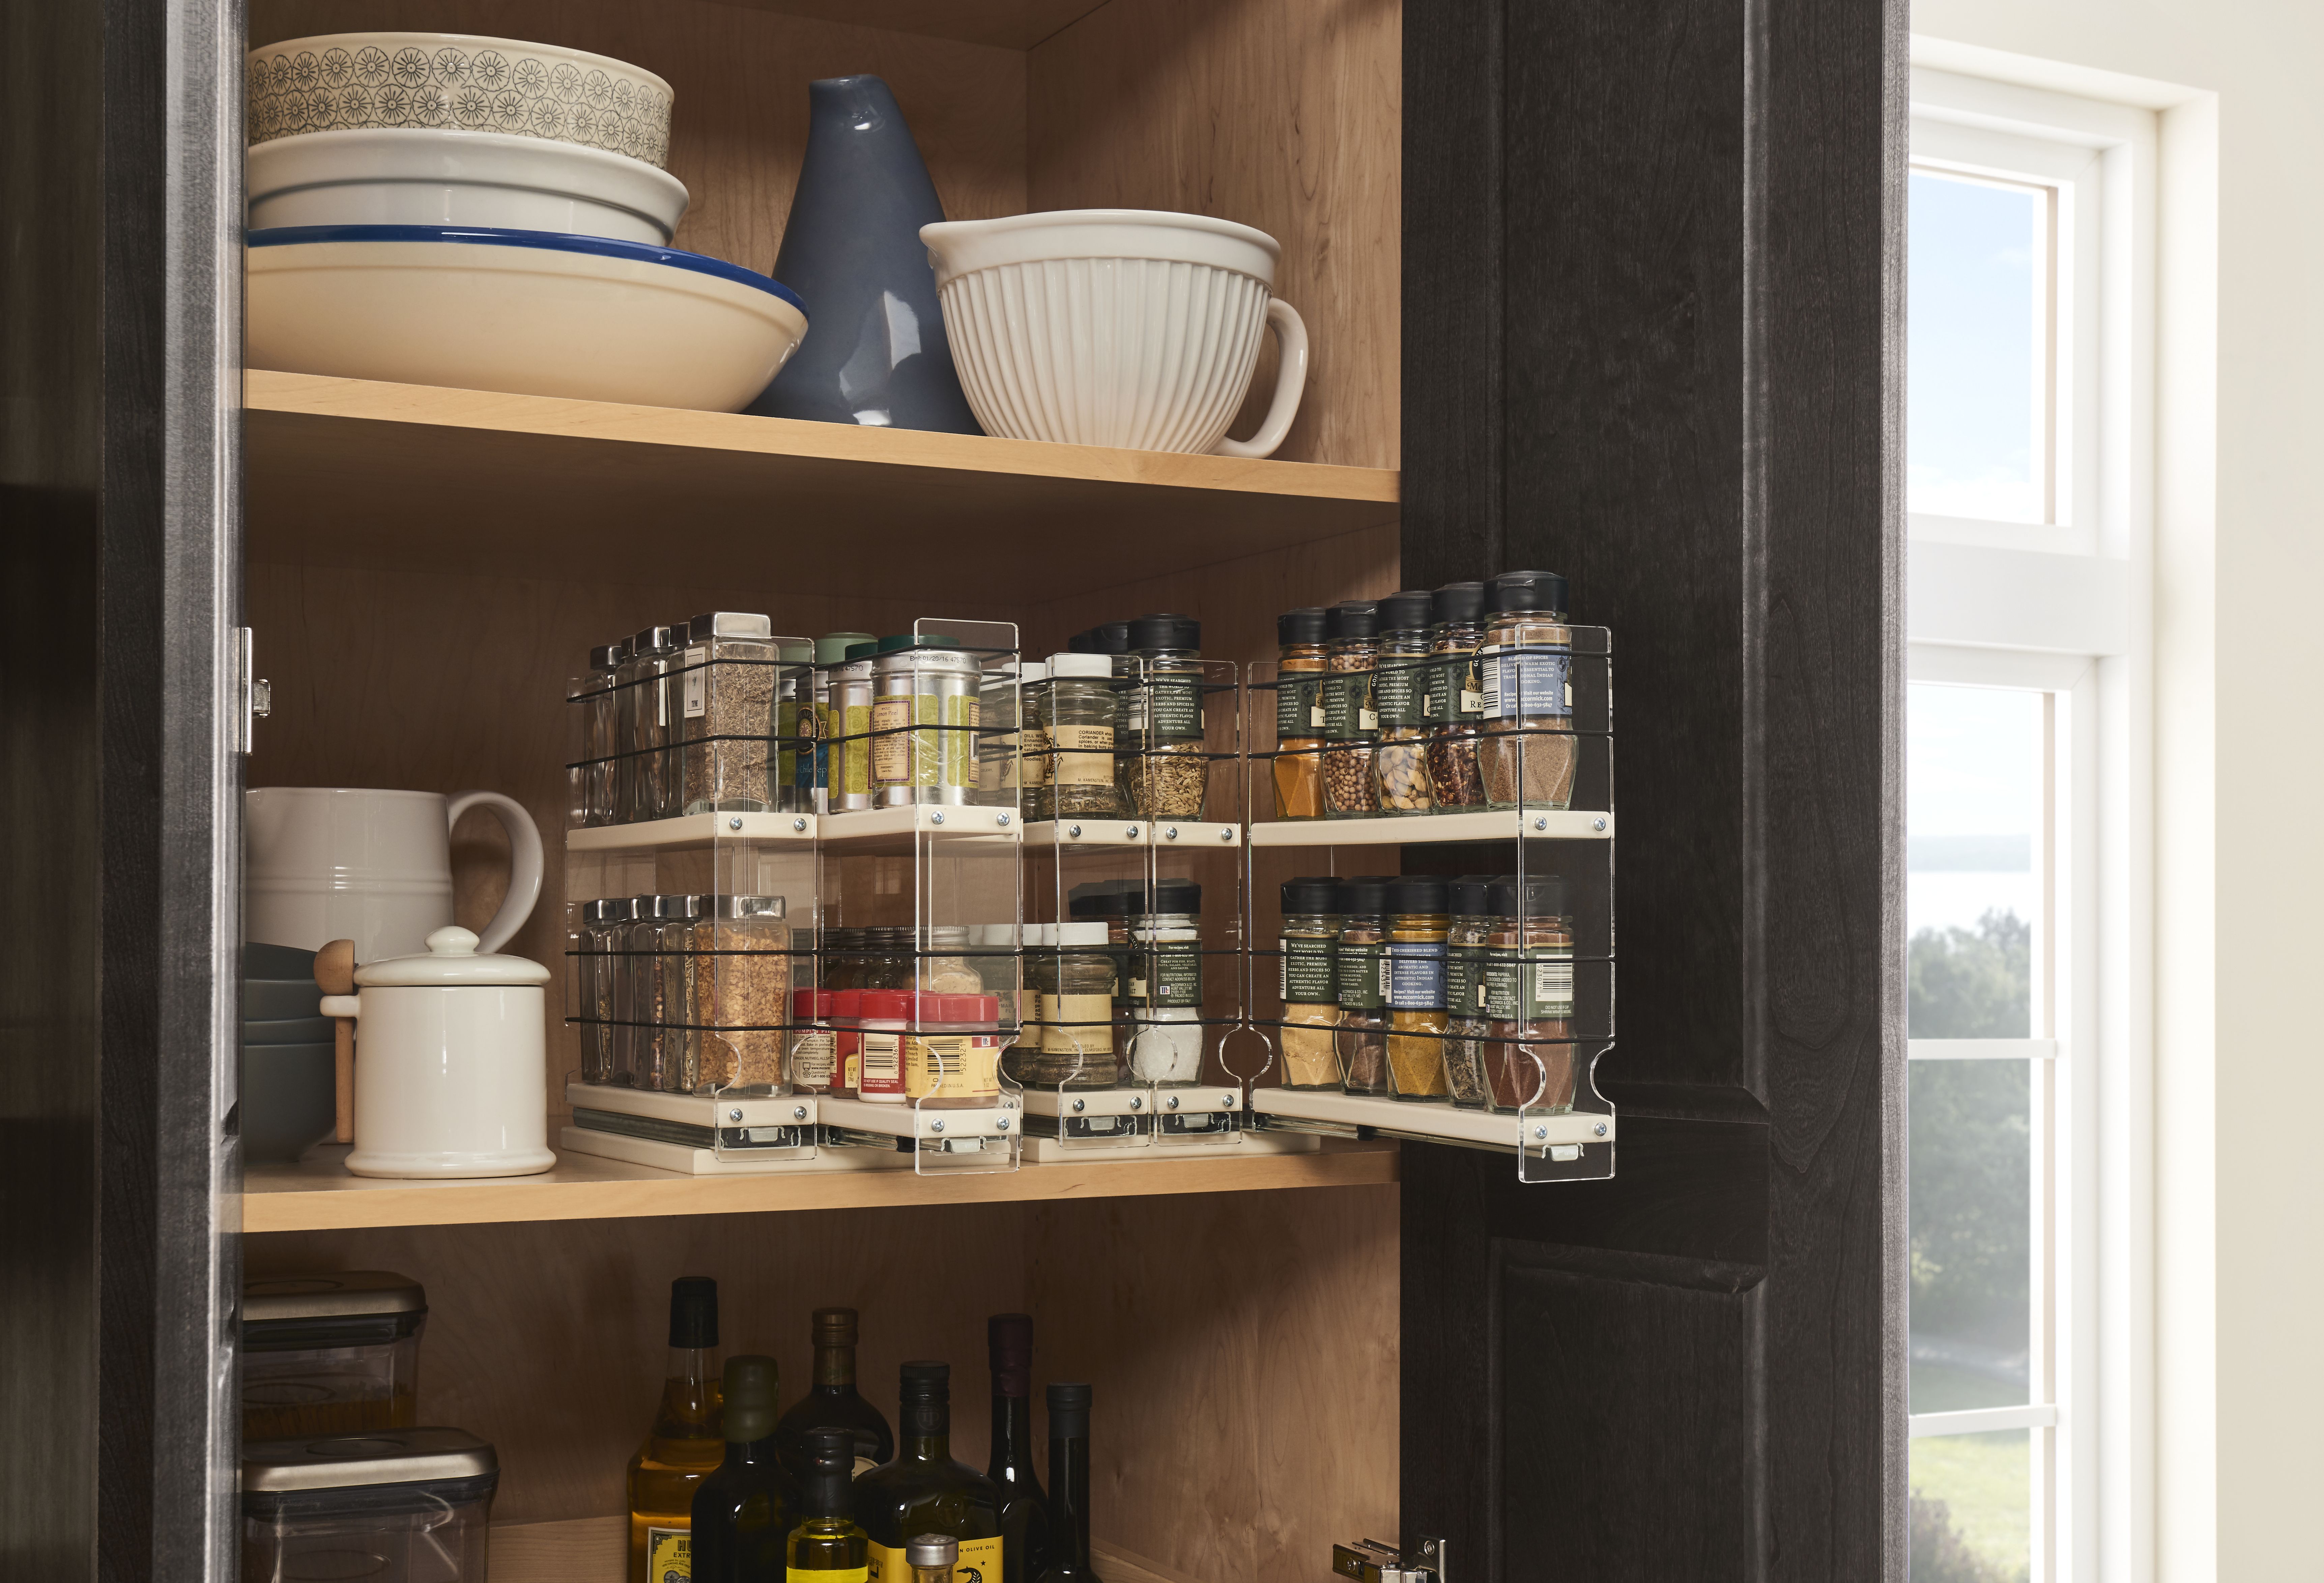 Yorktowne Cabinetry  Multi-Level Spice Rack Kit